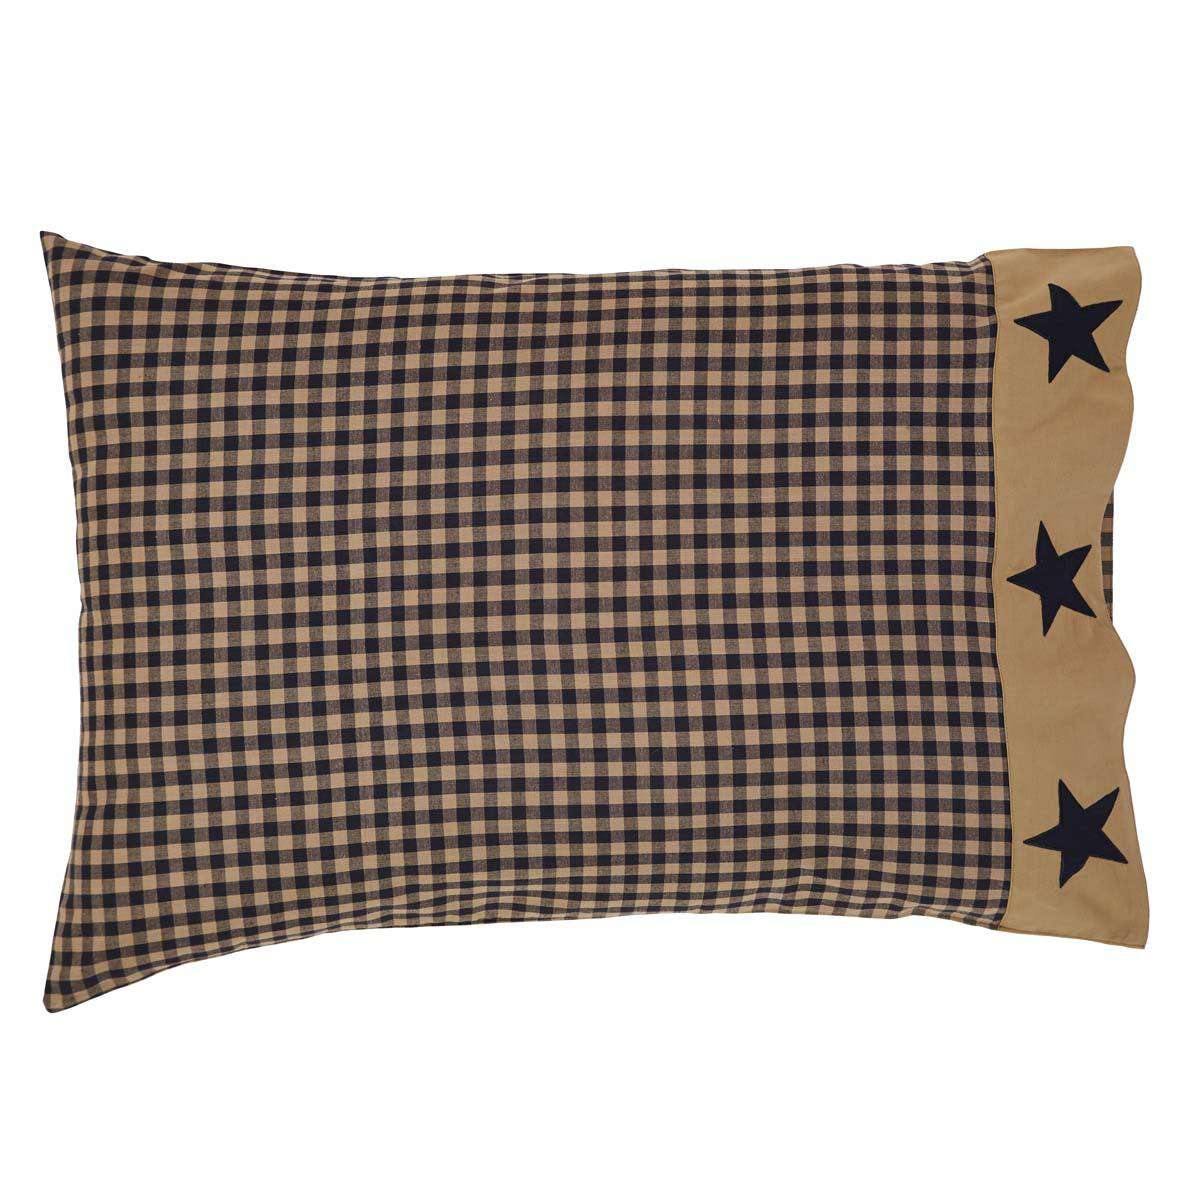 Teton Star Standard Pillow Case Applique Star Border Set of 2 21x30 VHC Brands - The Fox Decor